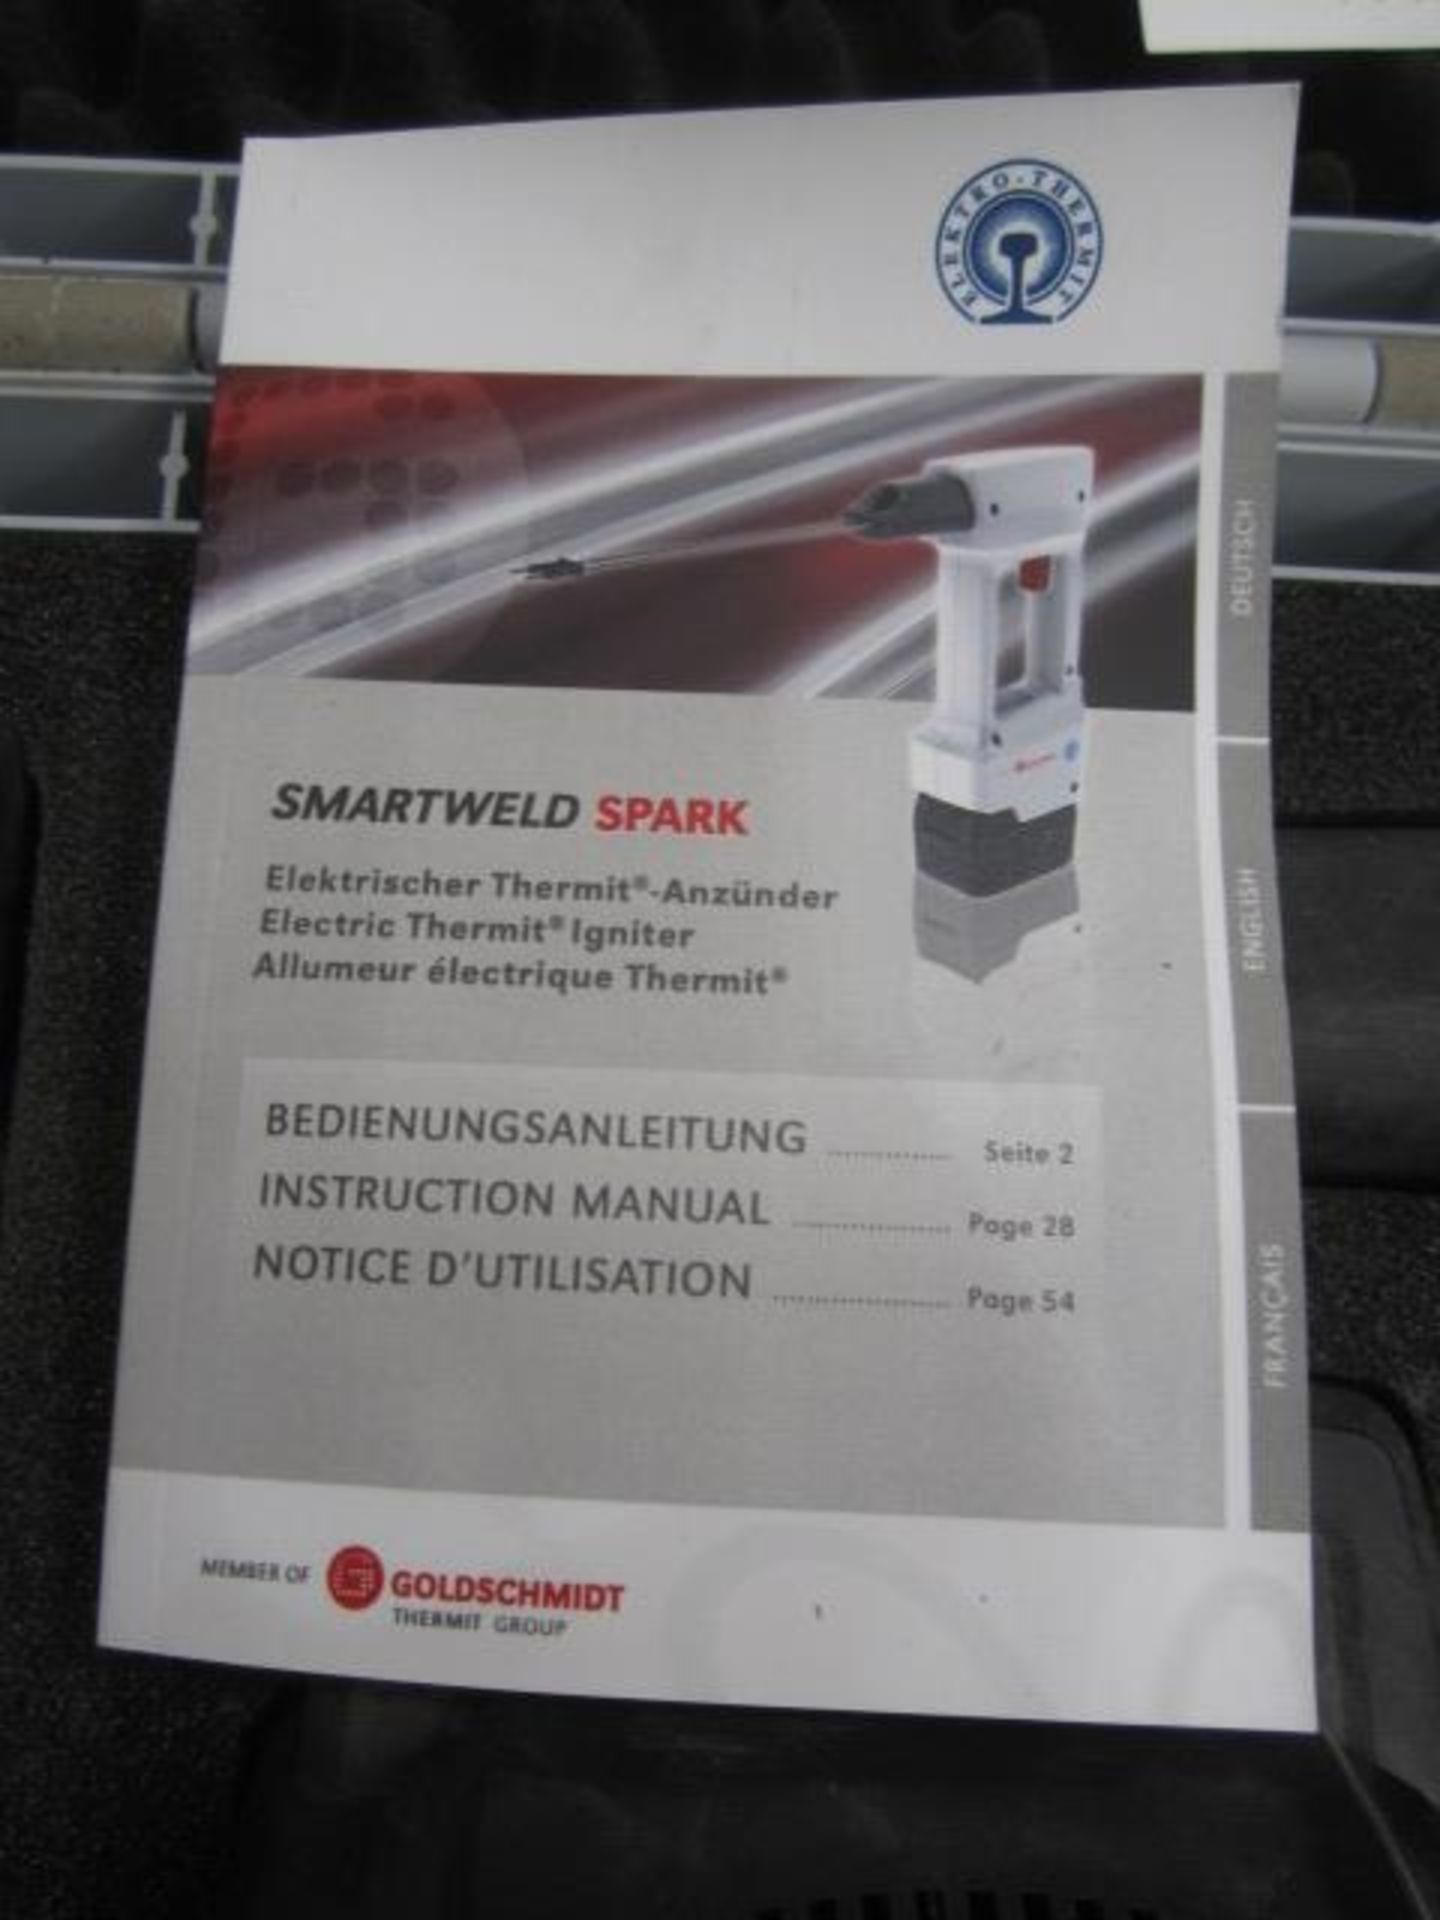 Goldschmidt Elektro-Thermit Smartweld spark igniter - Image 3 of 4